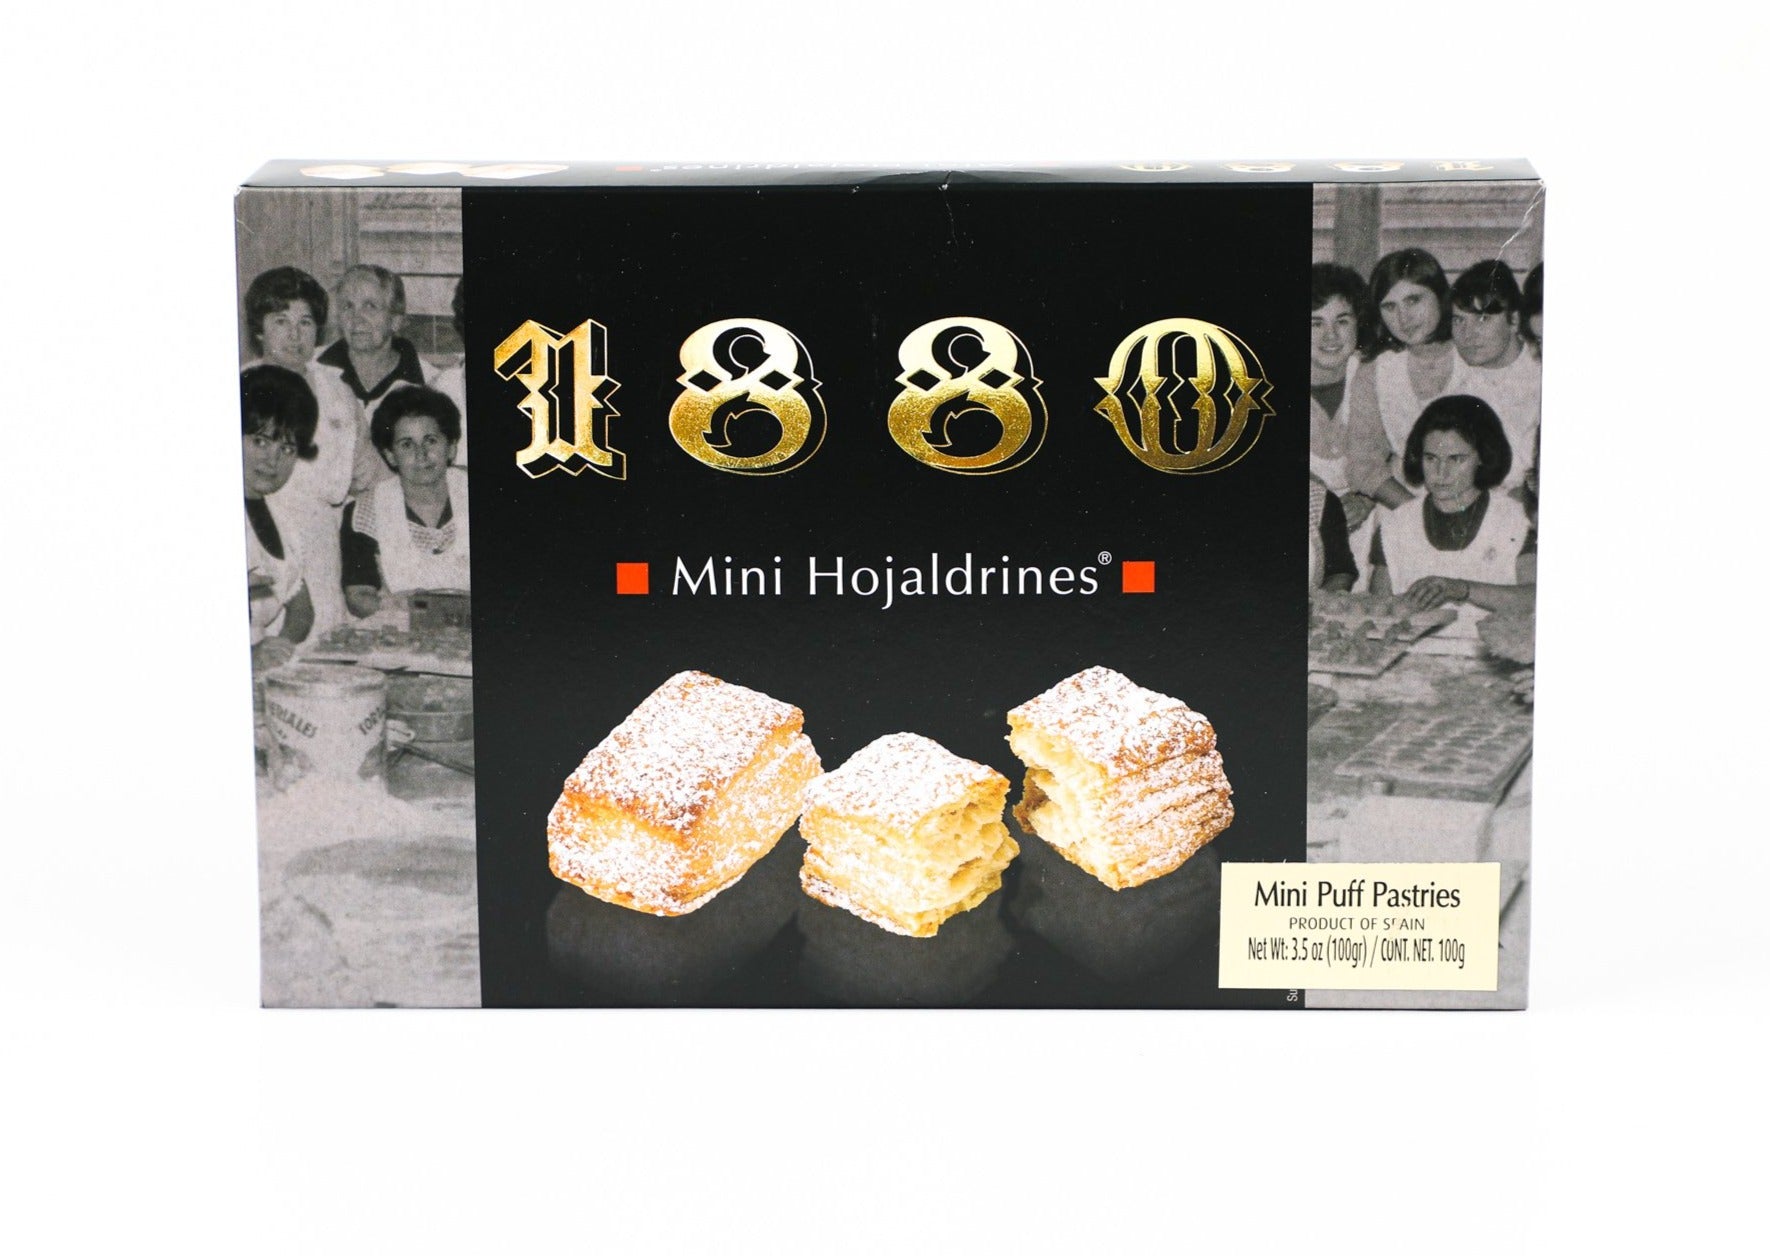 1880 Mini Hojaldrines - Mini Puff Pastries